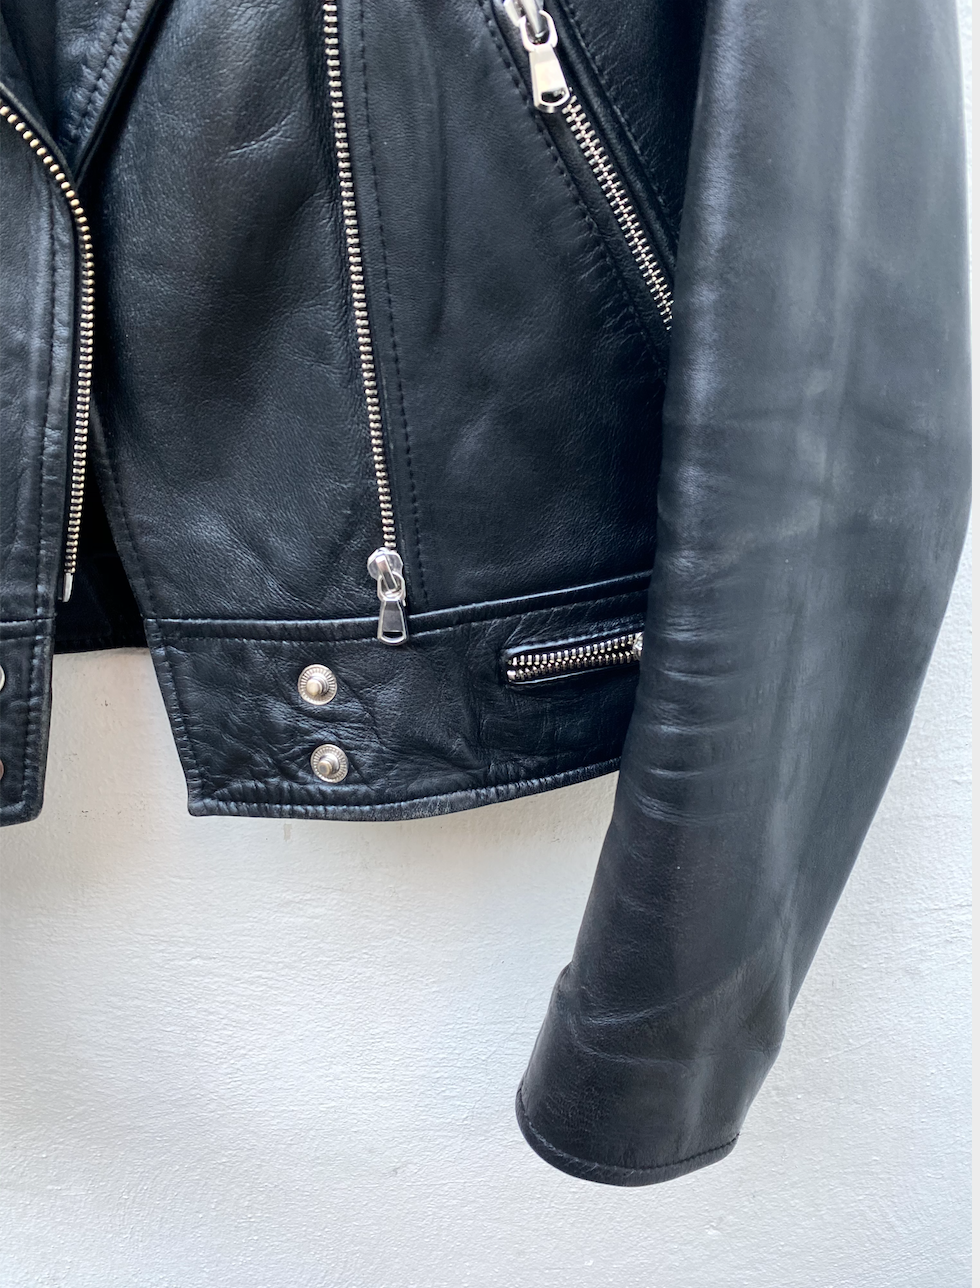 Sandro Black Biker Leather Jacket Size XS